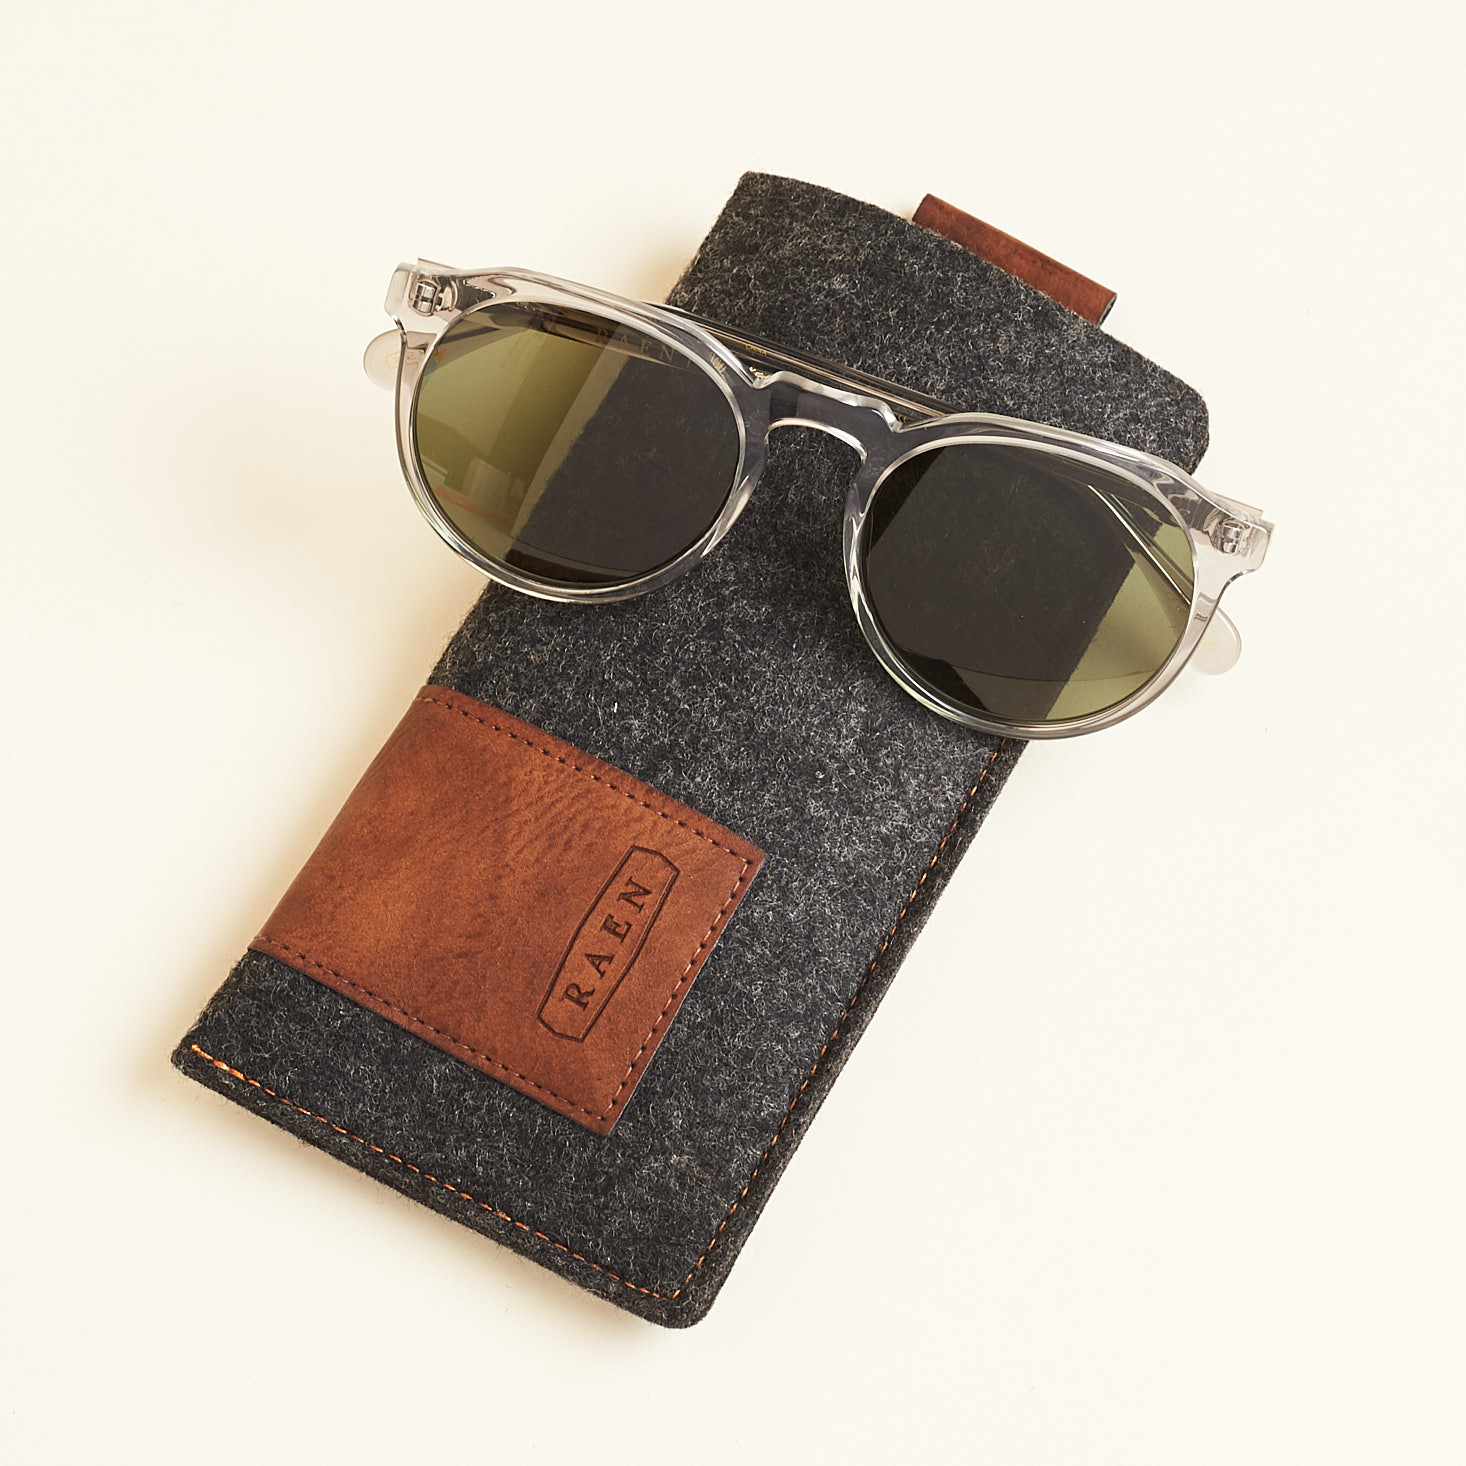 raen sunglasses sitting on grey felted case